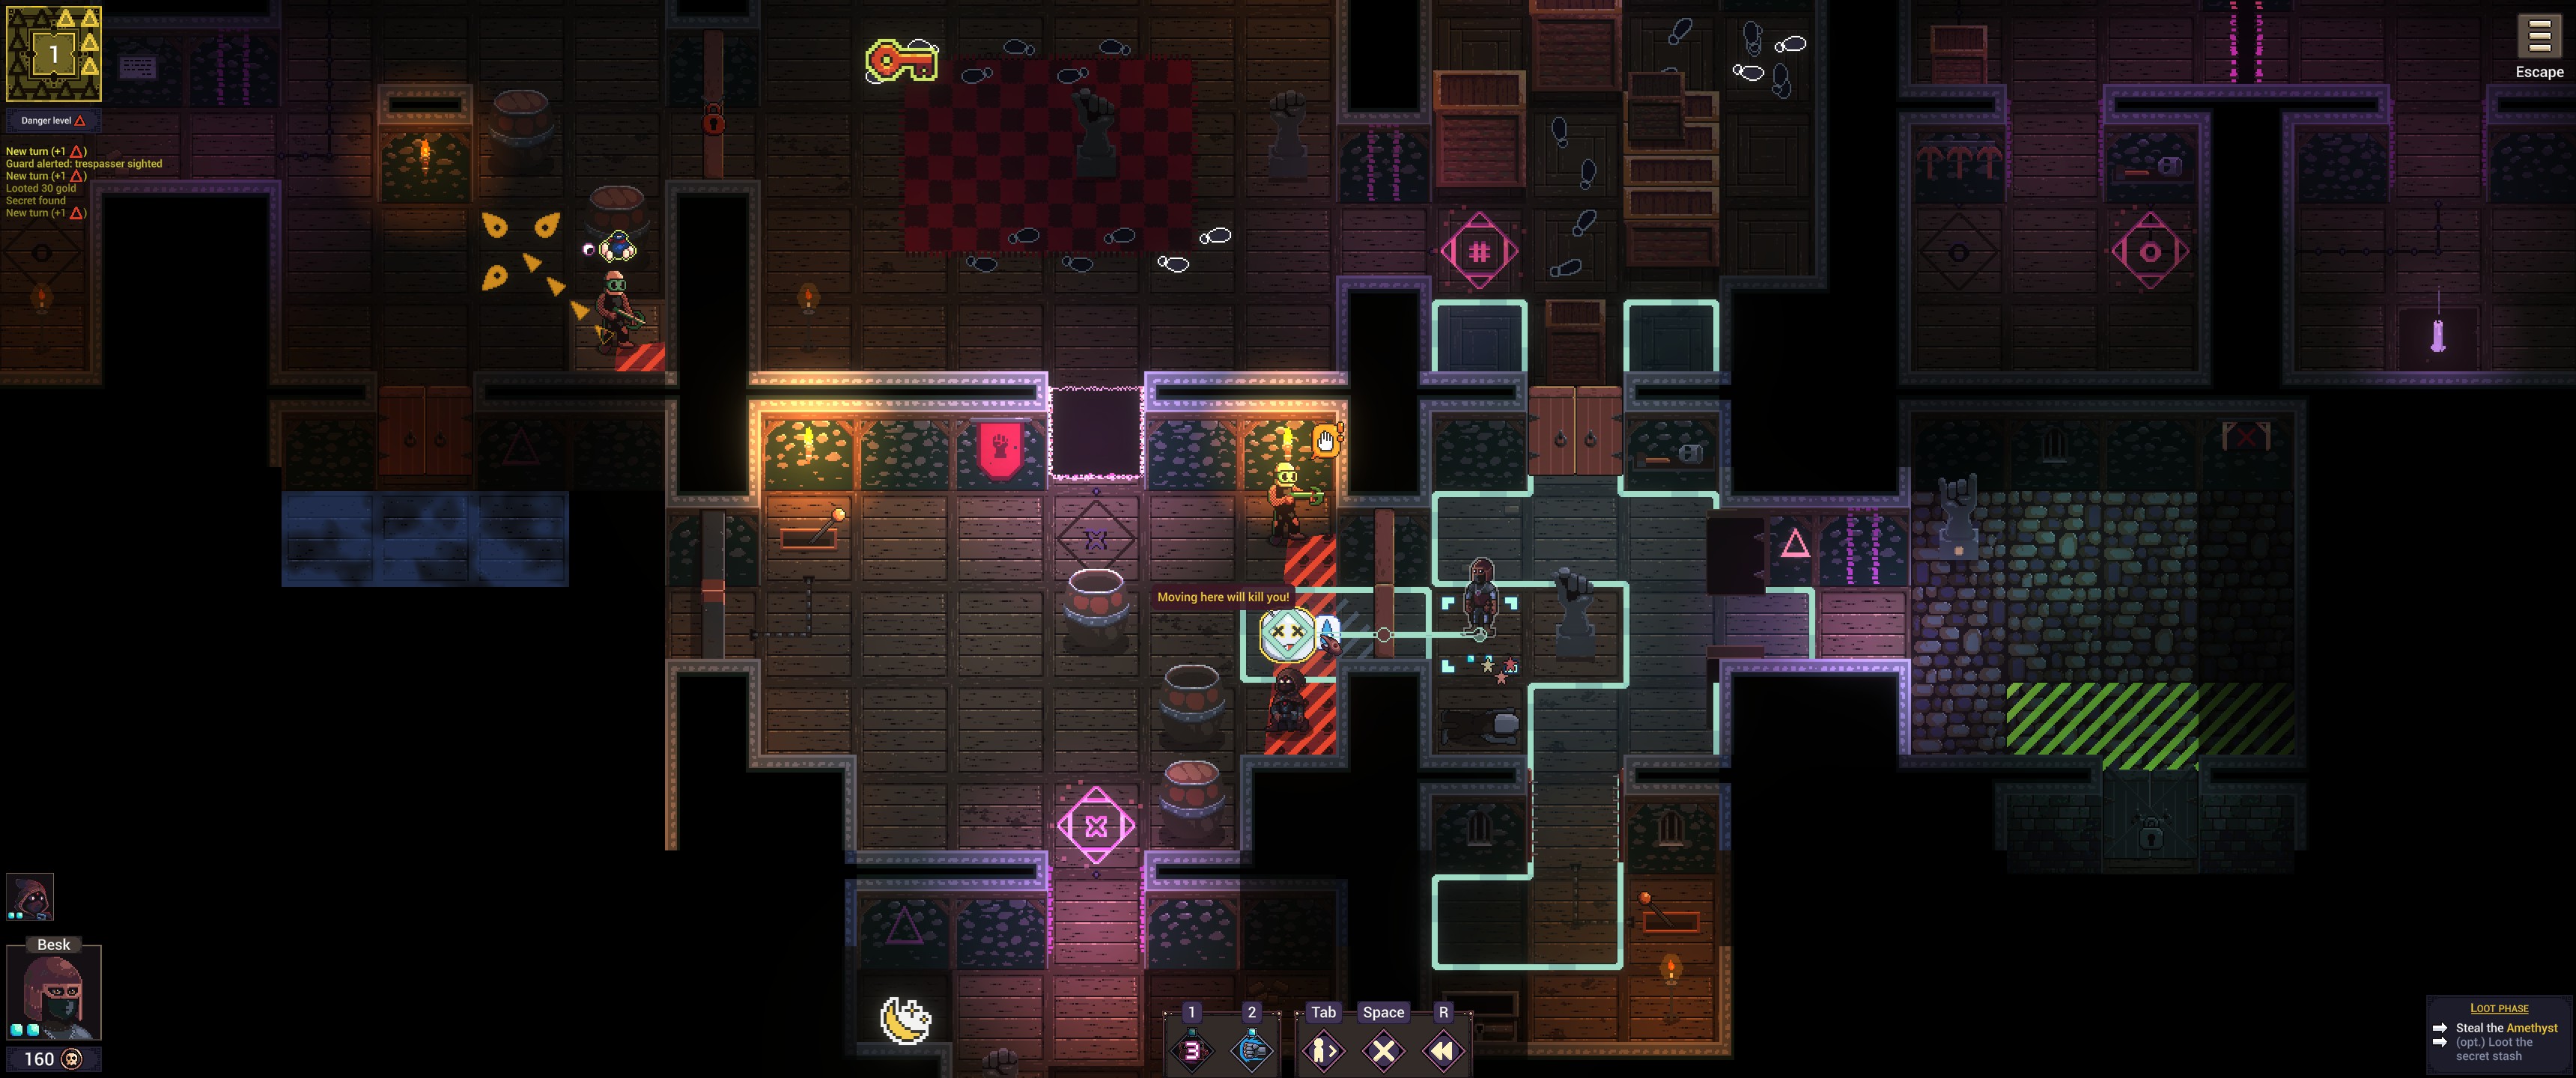 Spirited Thief, a pixel art stealth game